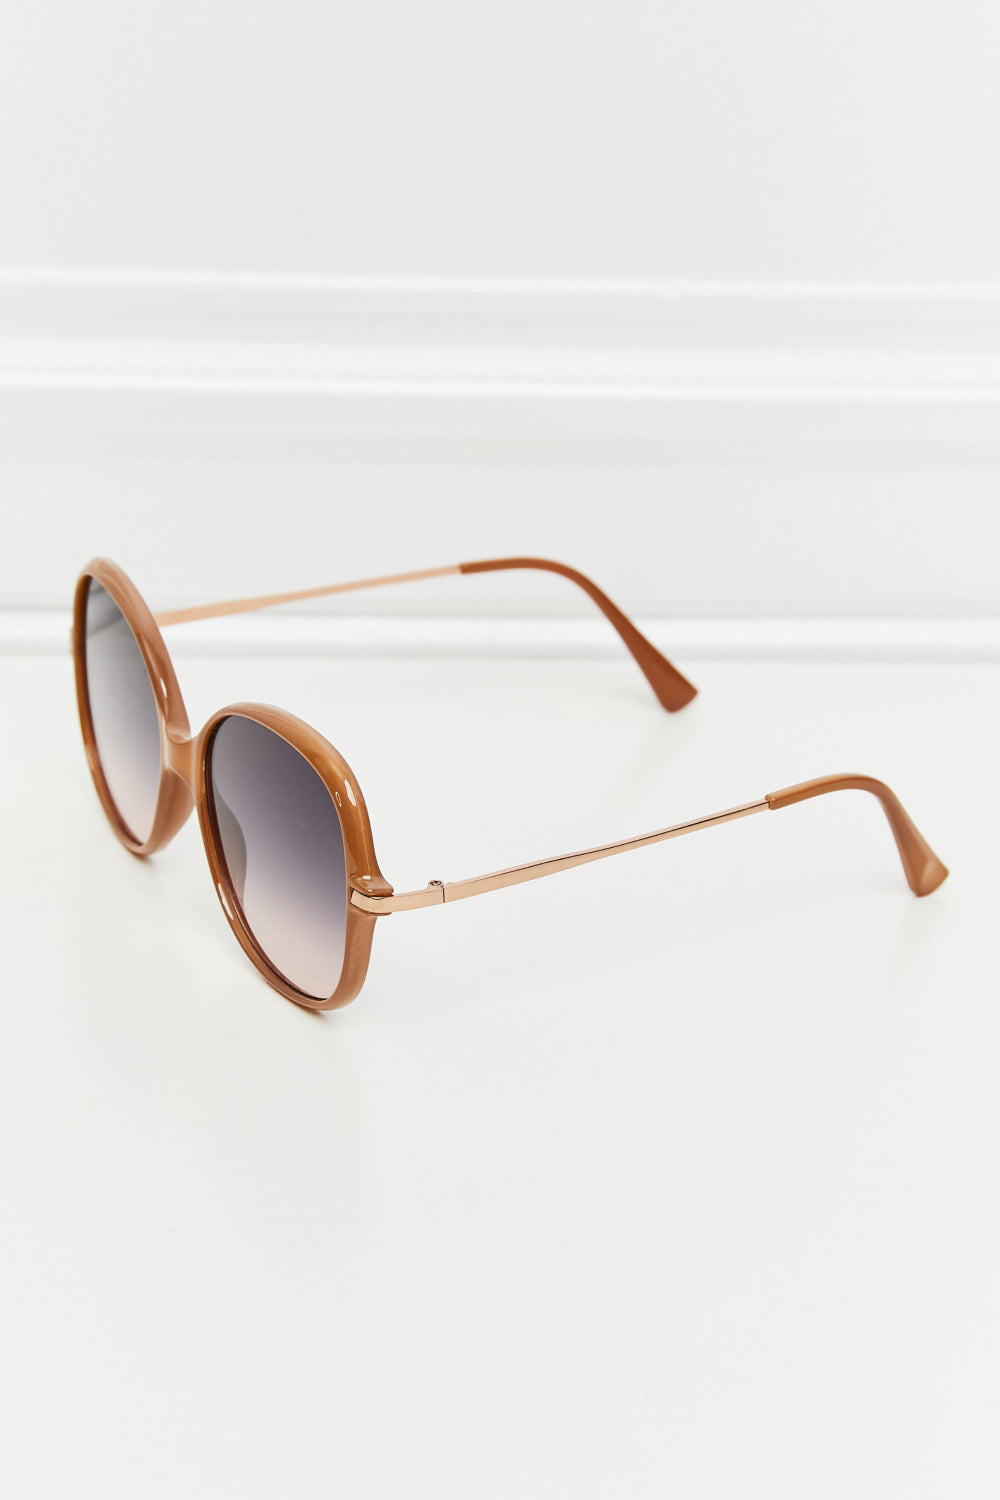 Metal-Plastic Hybrid Full Rim Sunglasses One Size Sunglasses by Vim&Vigor | Vim&Vigor Boutique